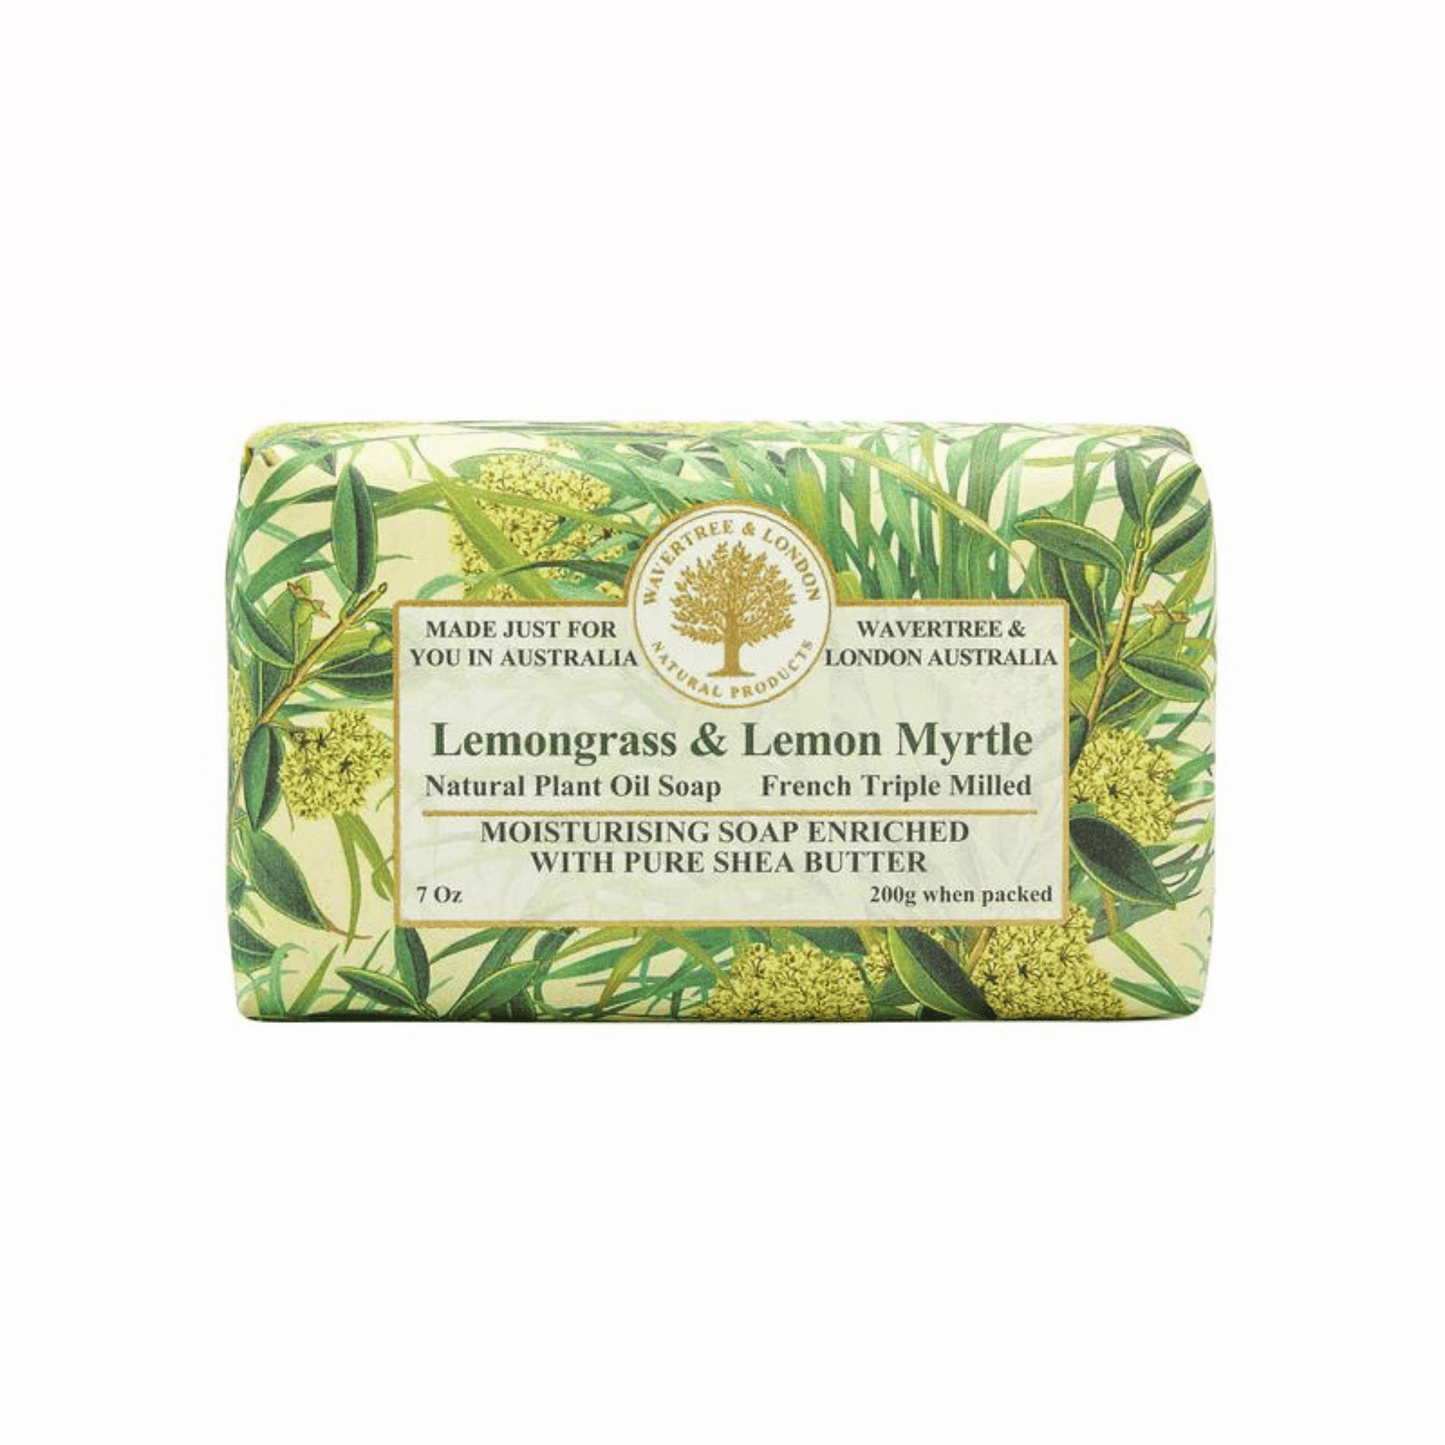 Primary Image of Lemongrass & Lemon Myrtle Soap Bar